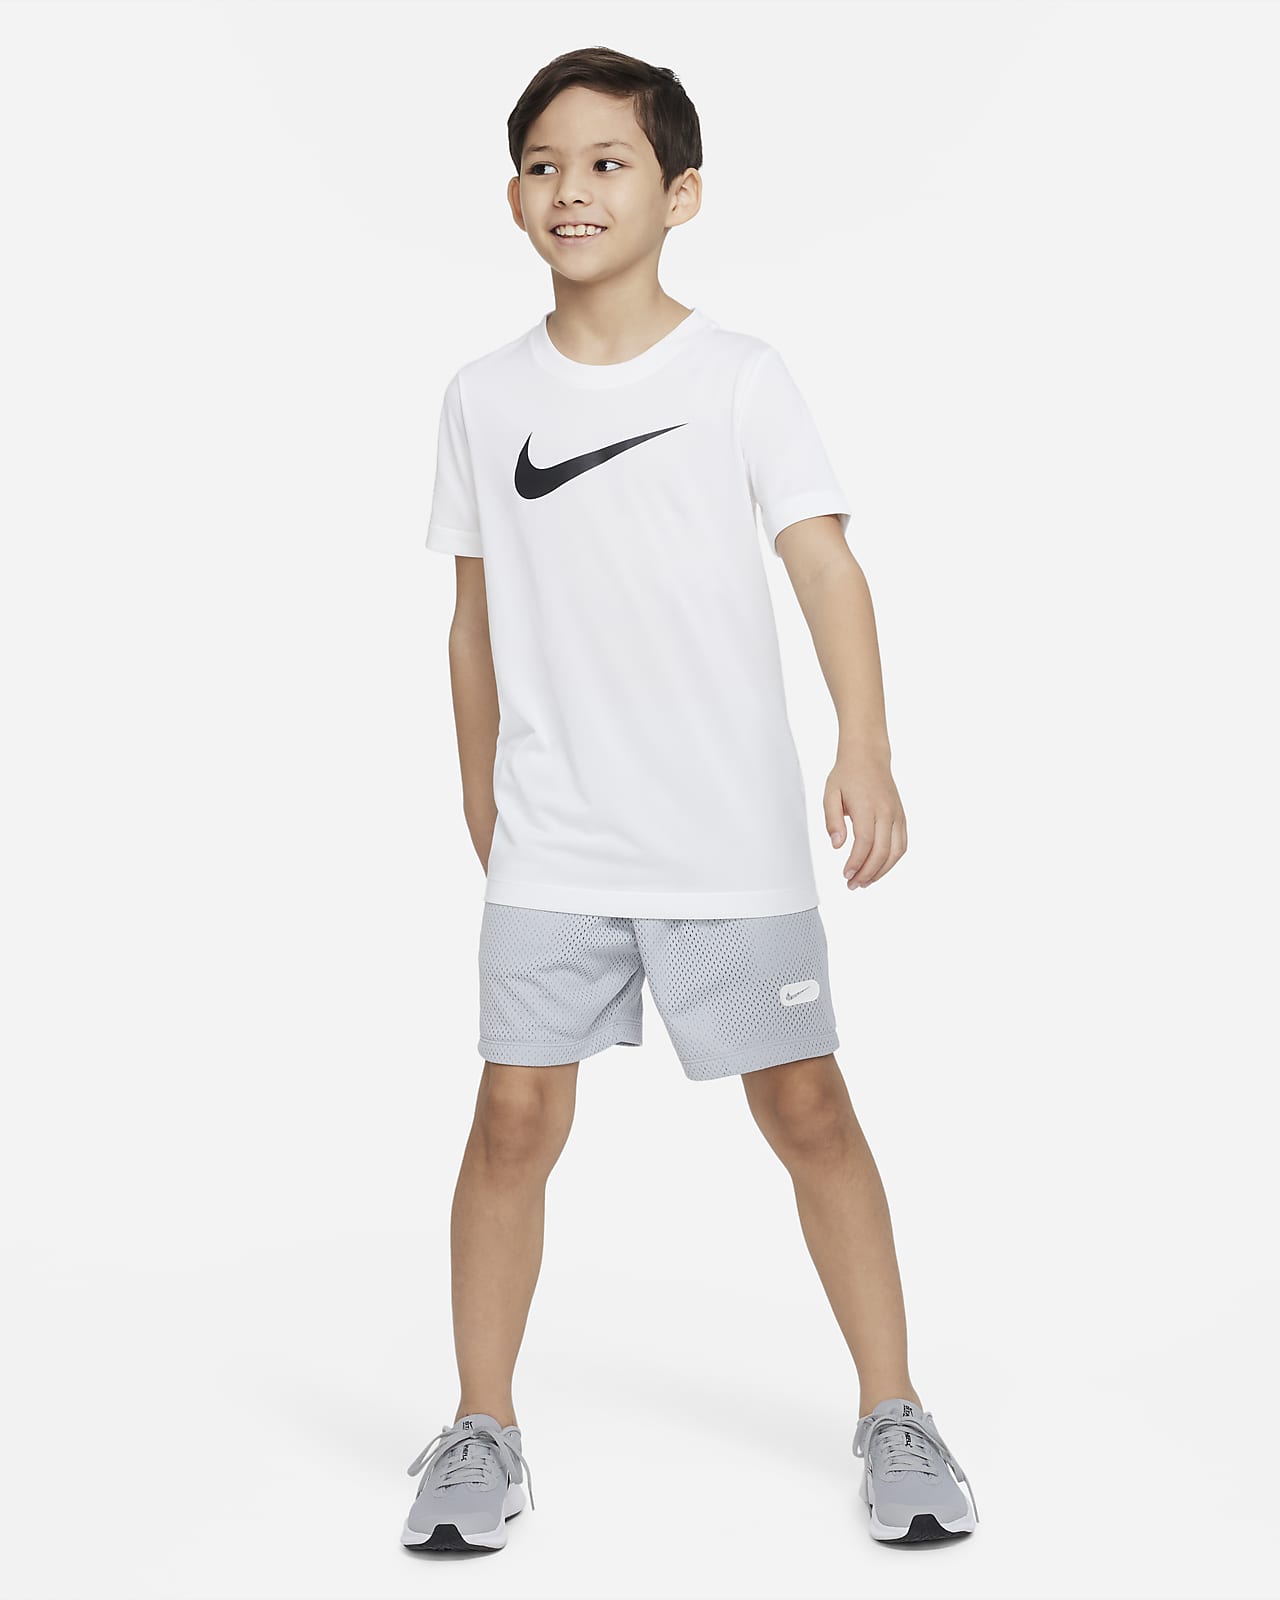 Nike Boy's Dri-Fit™ Boxers 3-Pack (Big Kids) Black MD (10-12 Big Kid) :  : Clothing, Shoes & Accessories